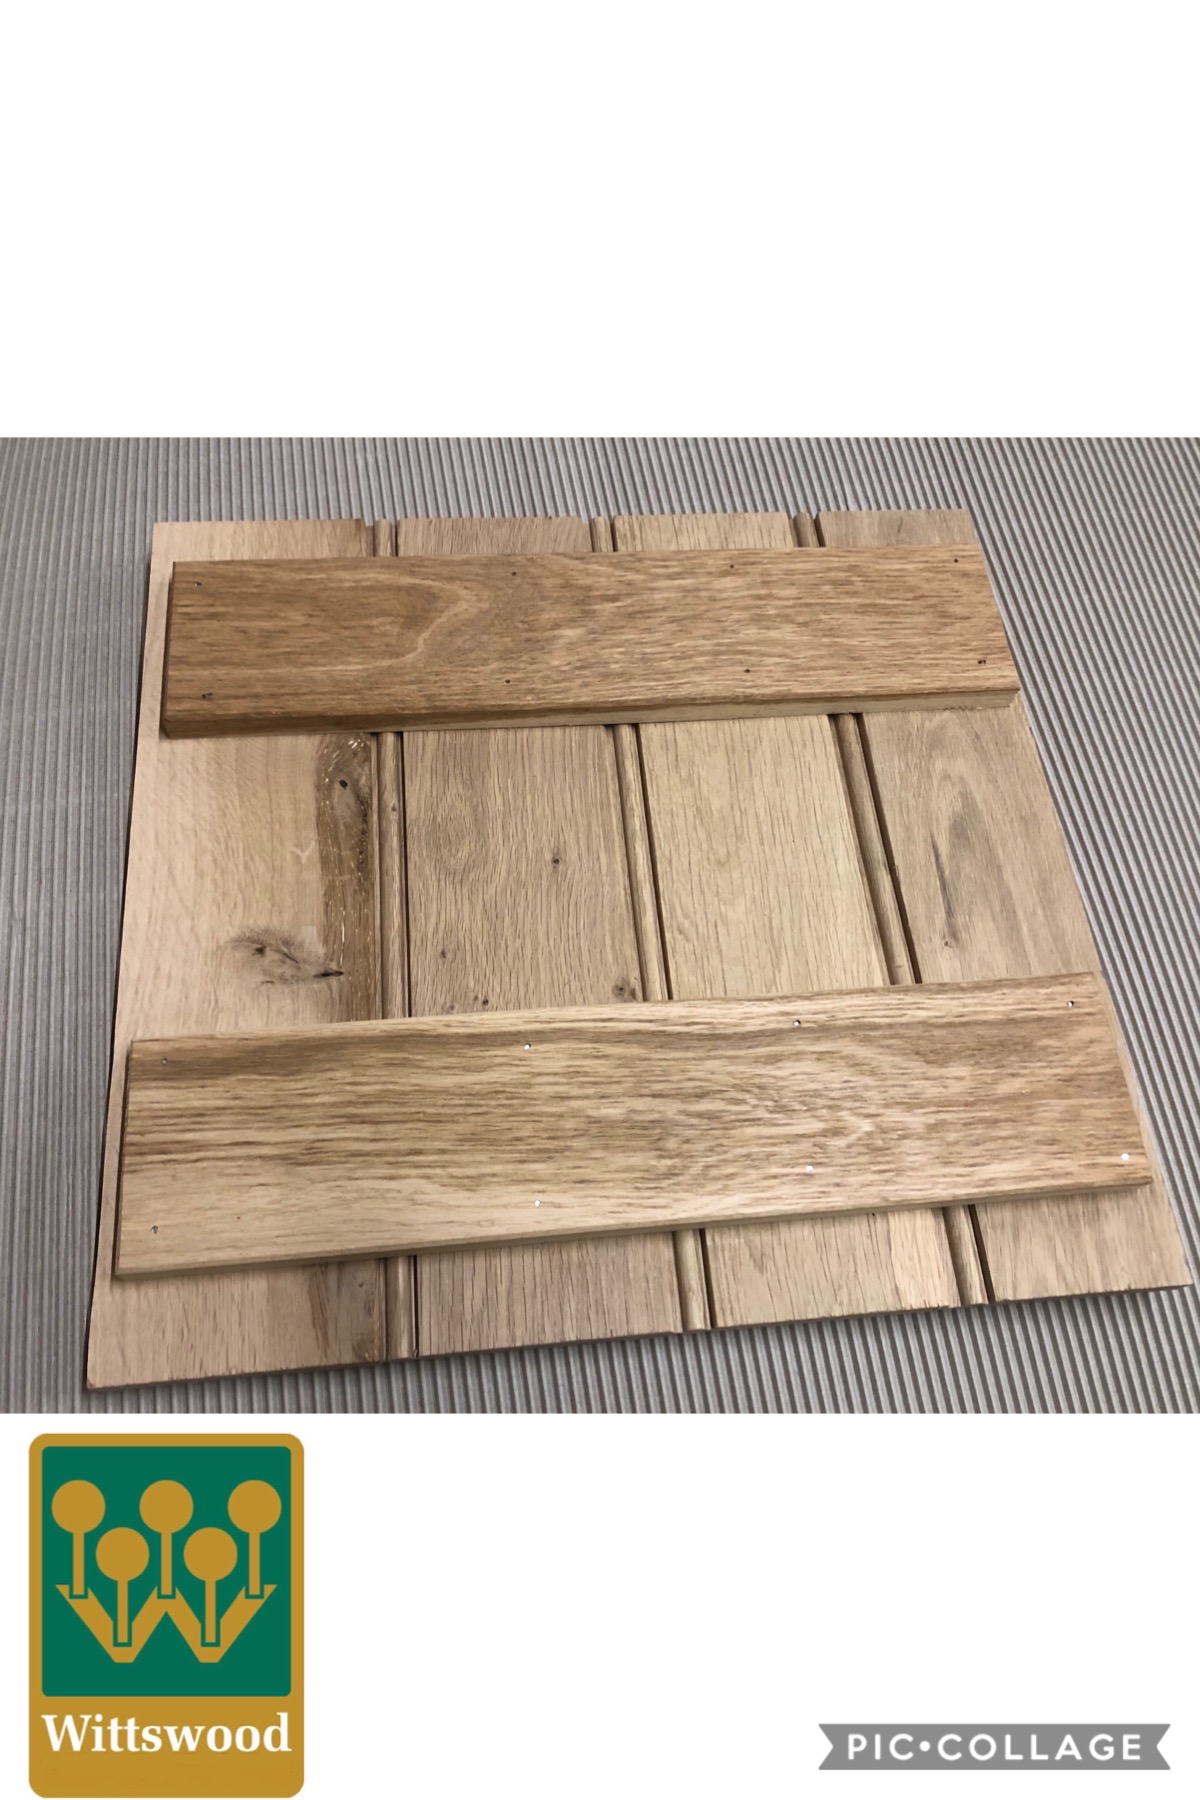 wittswood kitchen cupboard wood